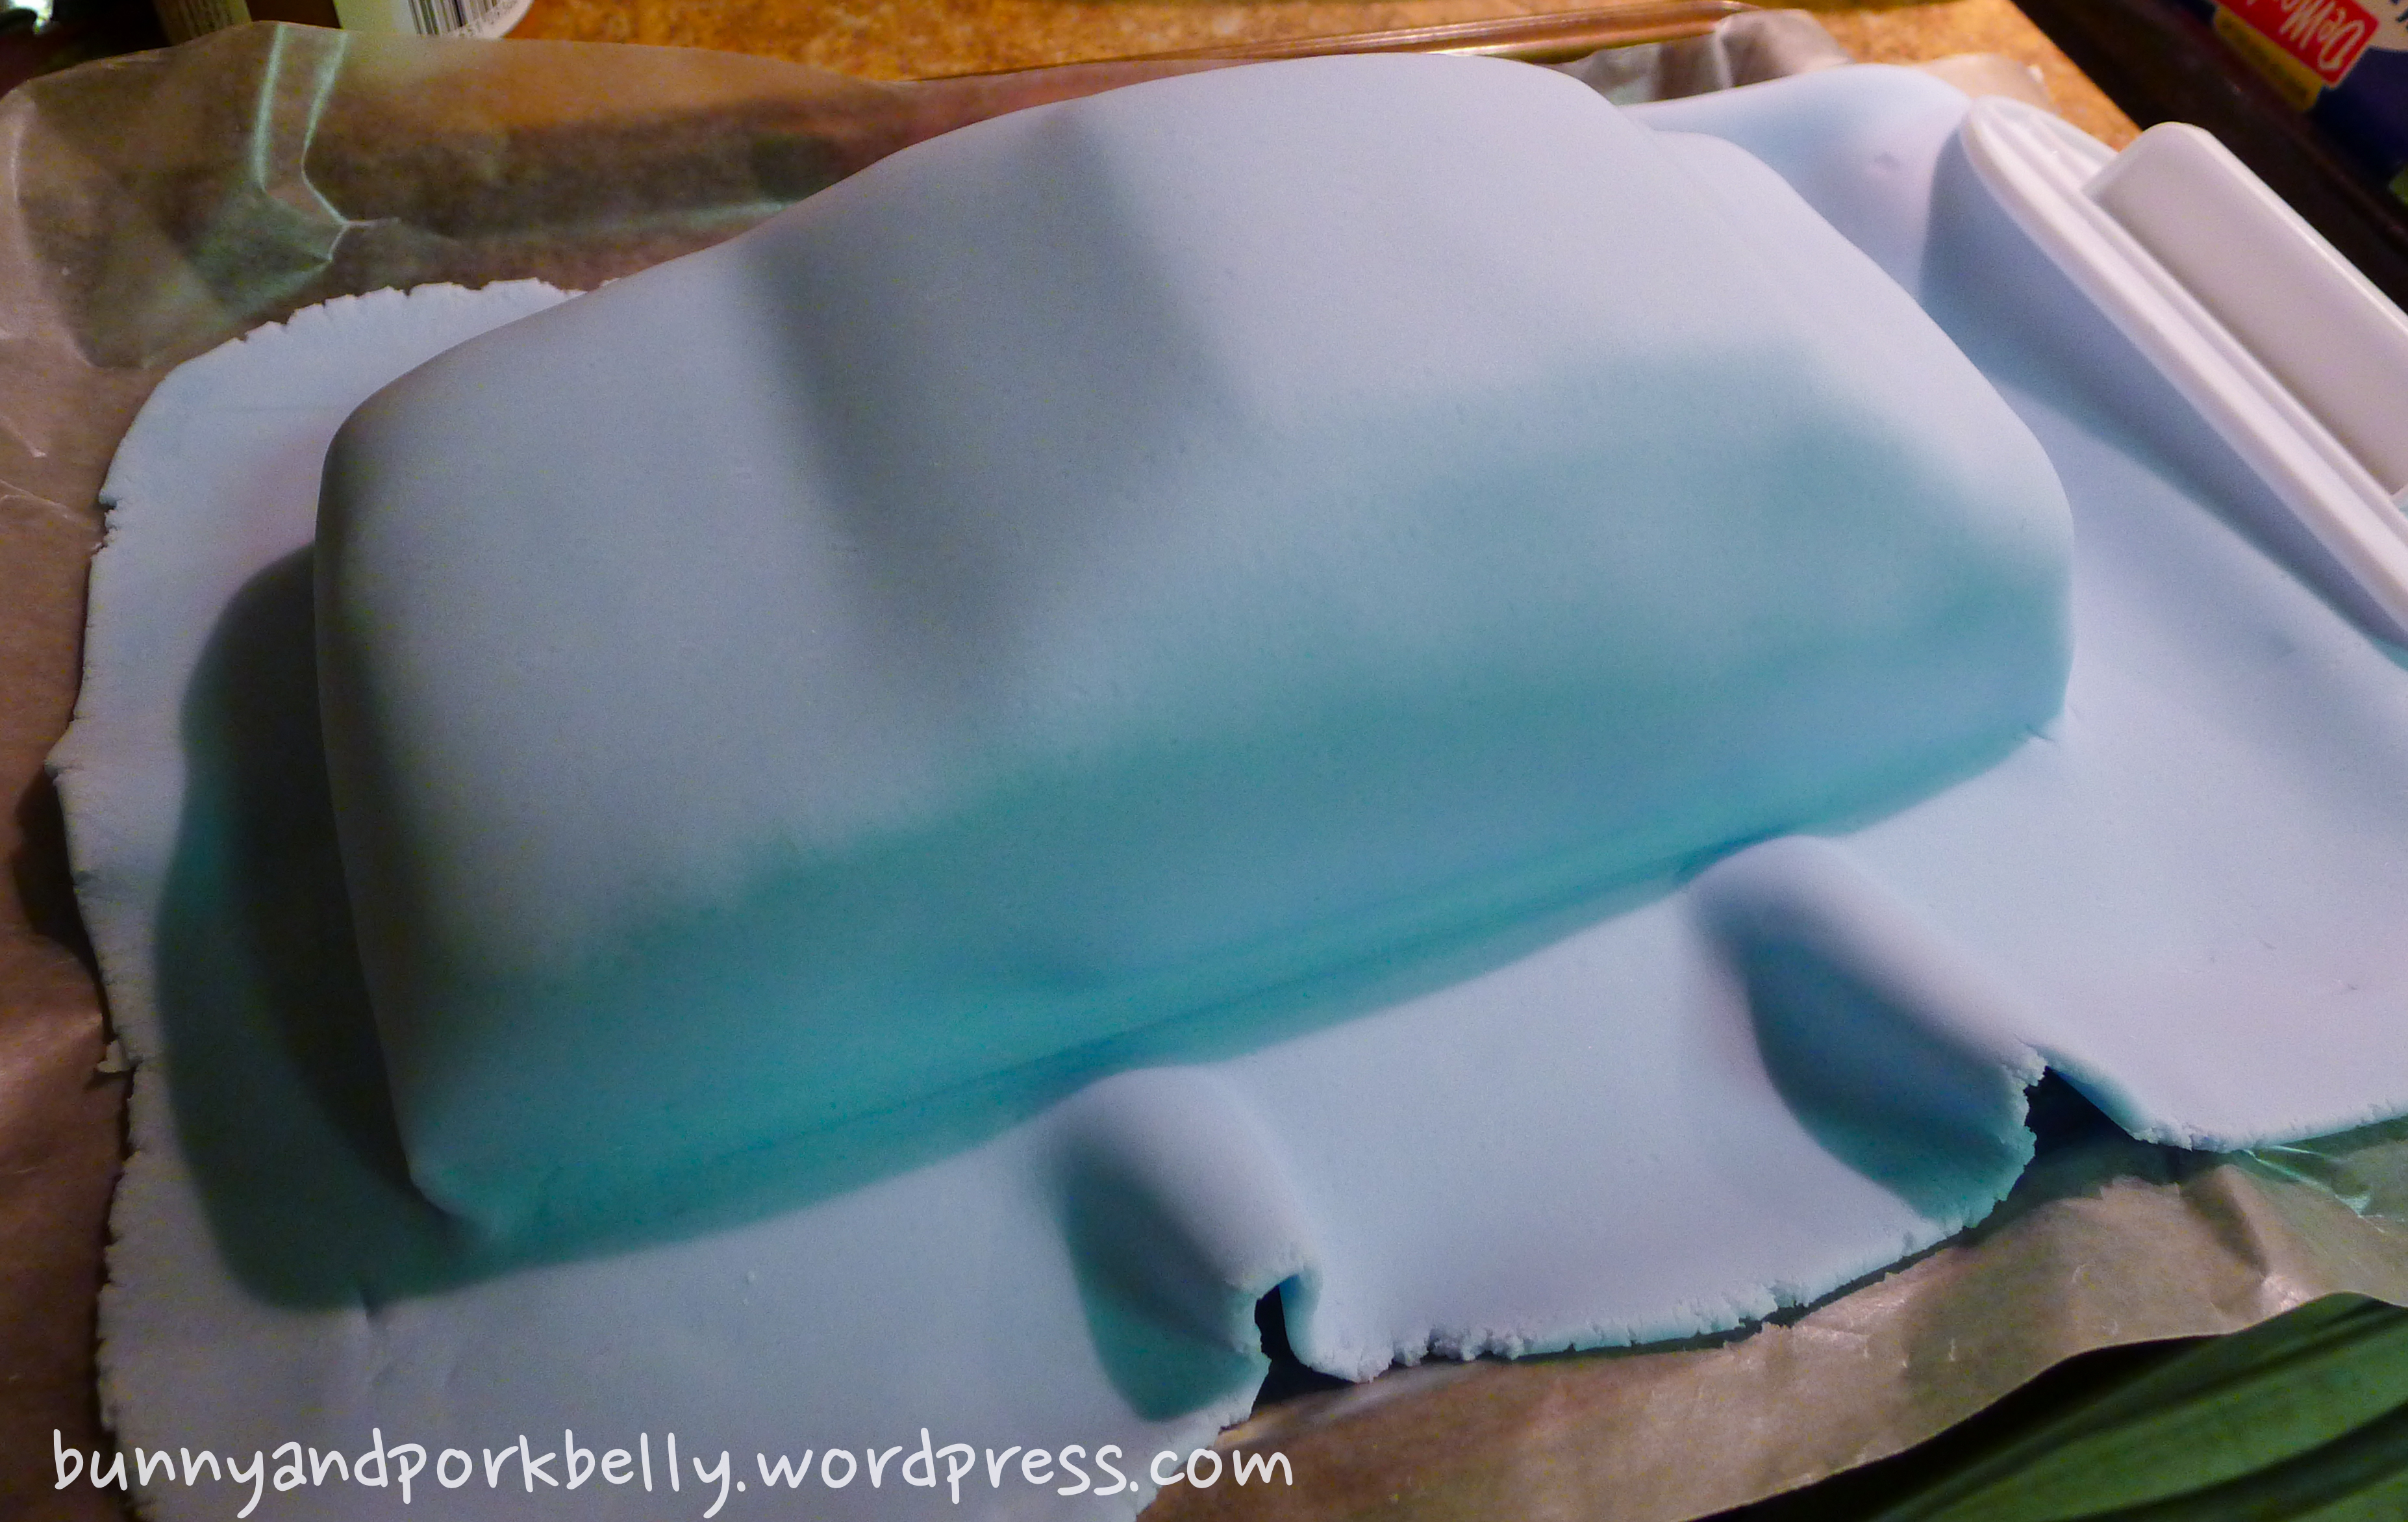 How To Make An Evo Ix Fondant Car Cake Bunnyandporkbelly